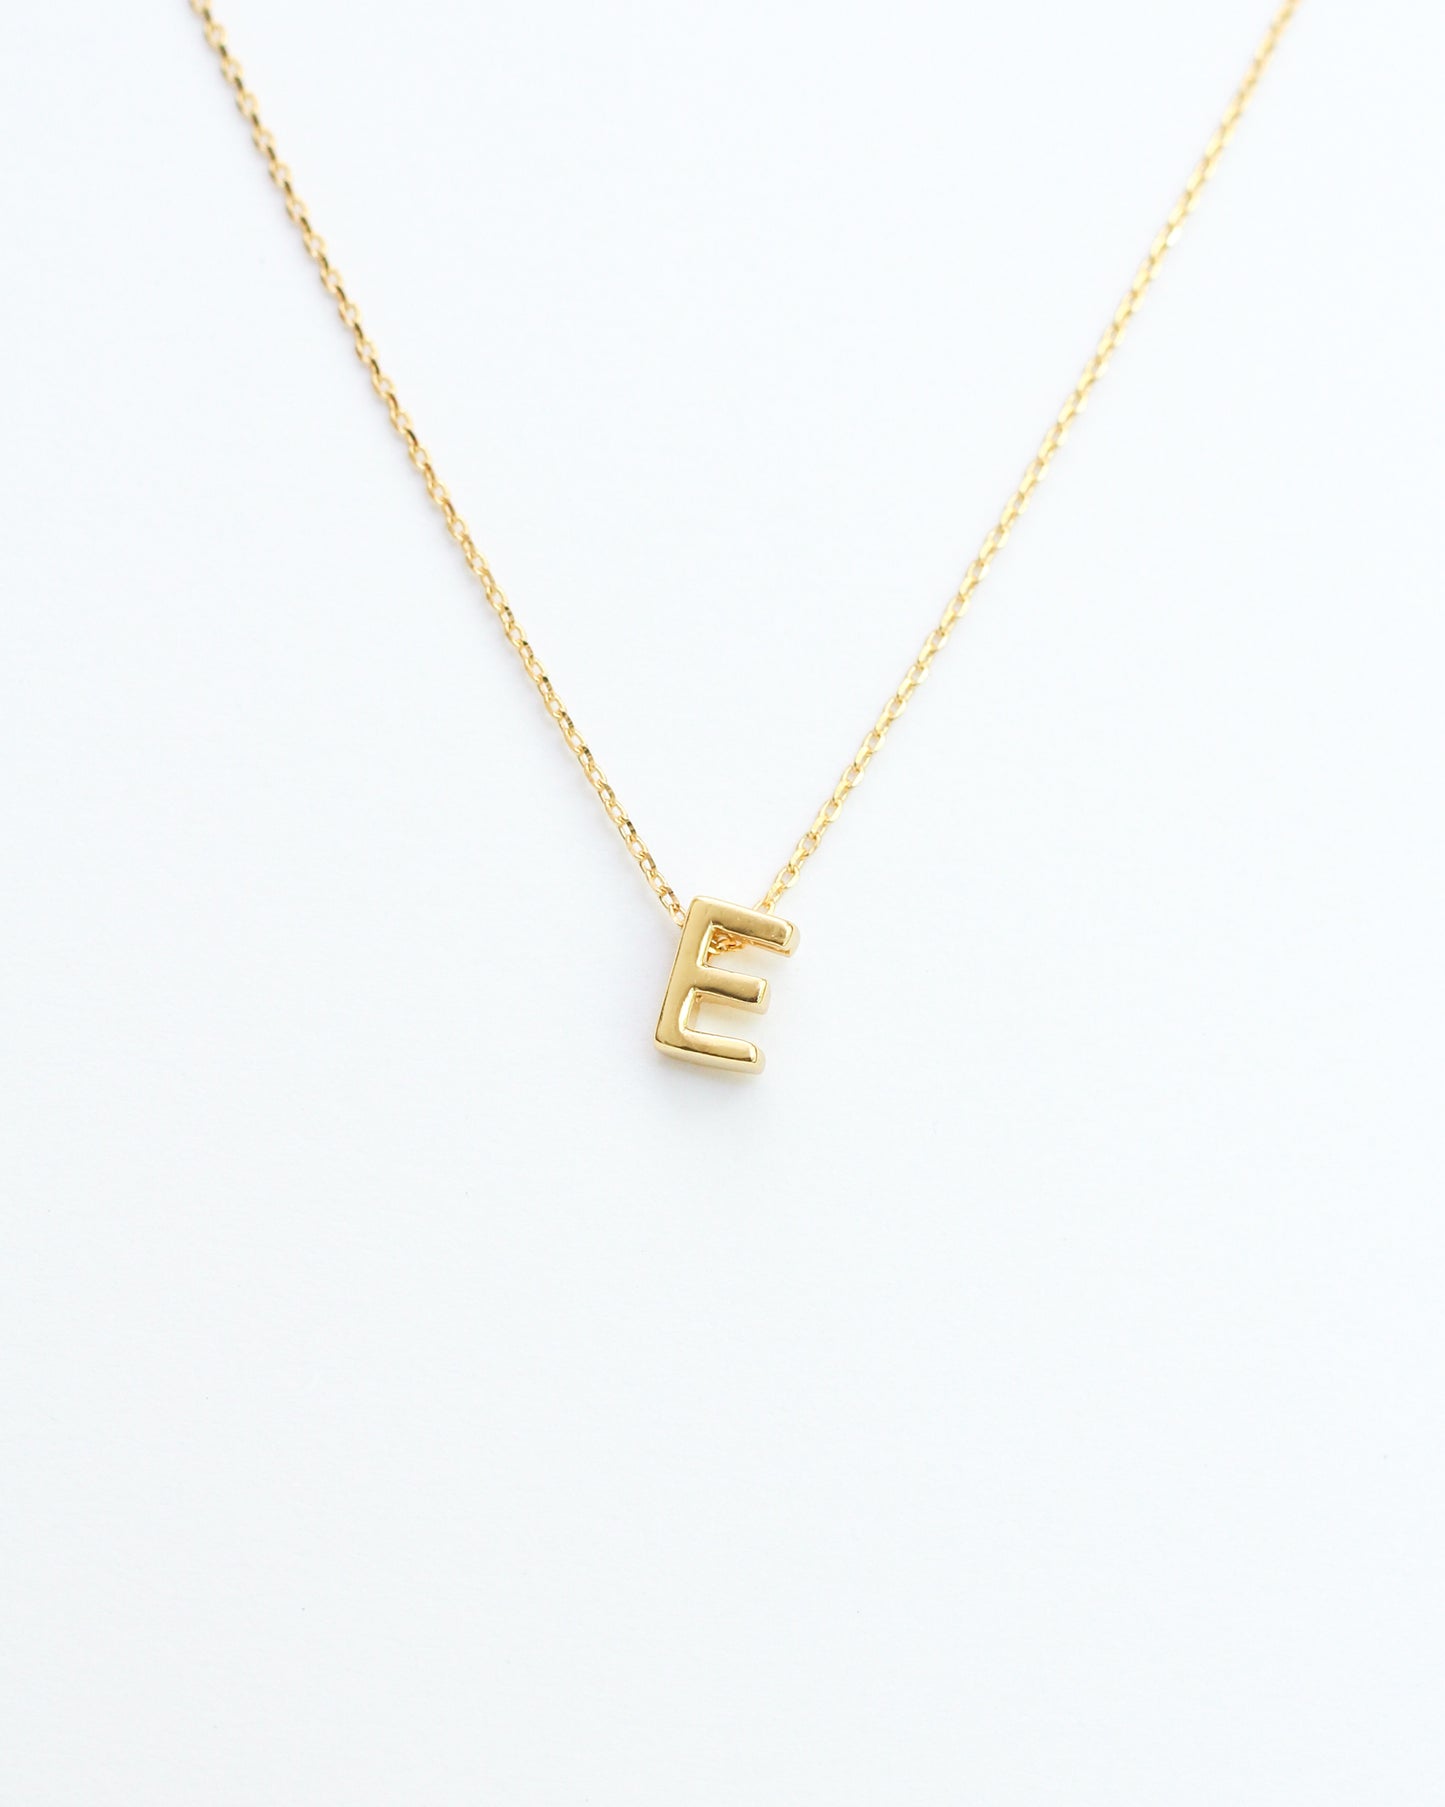 Gold Initial Letter Block Necklace. Letter E necklace